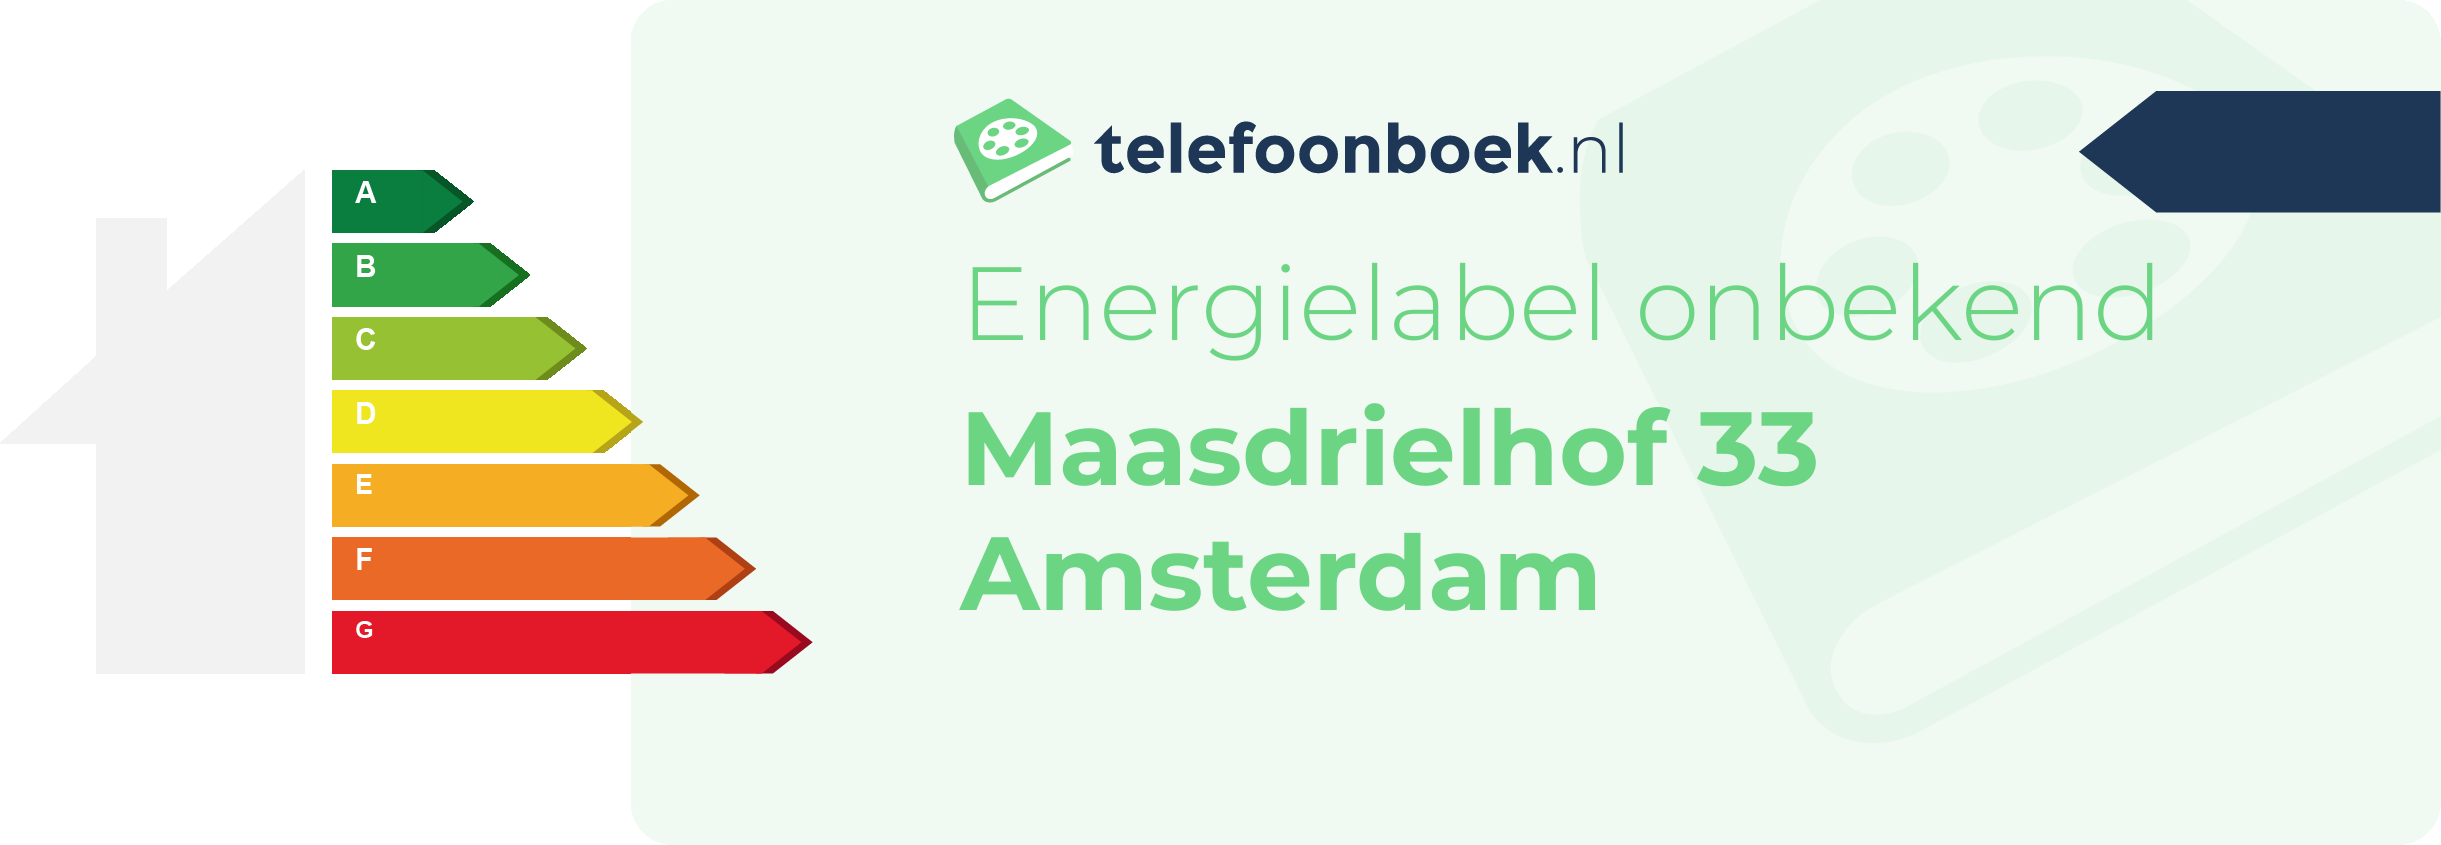 Energielabel Maasdrielhof 33 Amsterdam